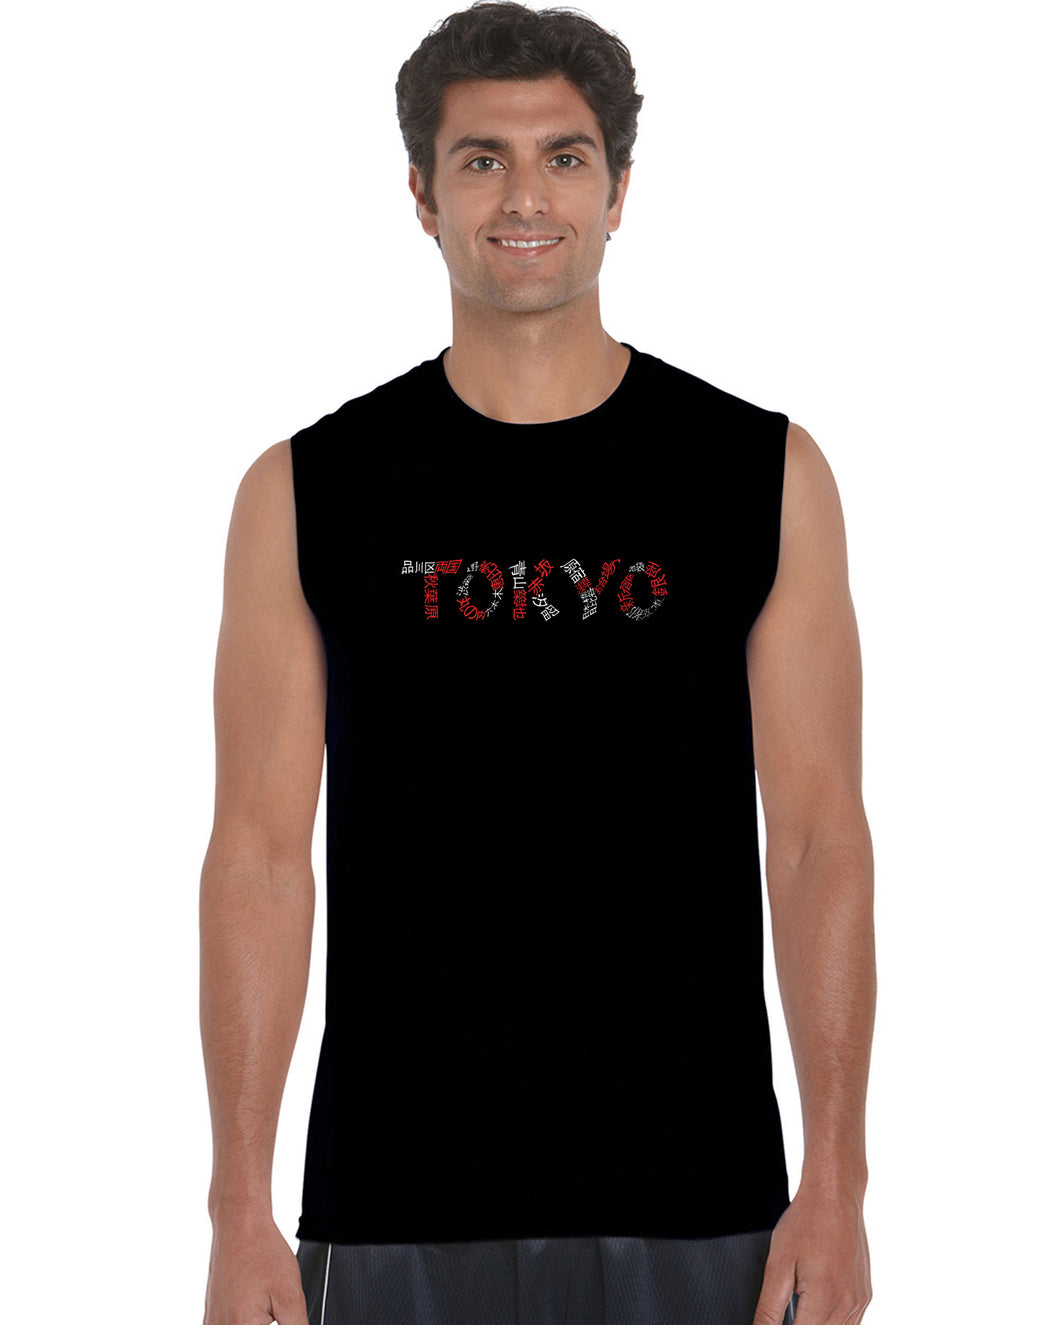 THE NEIGHBORHOODS OF TOKYO - Men's Word Art Sleeveless T-Shirt